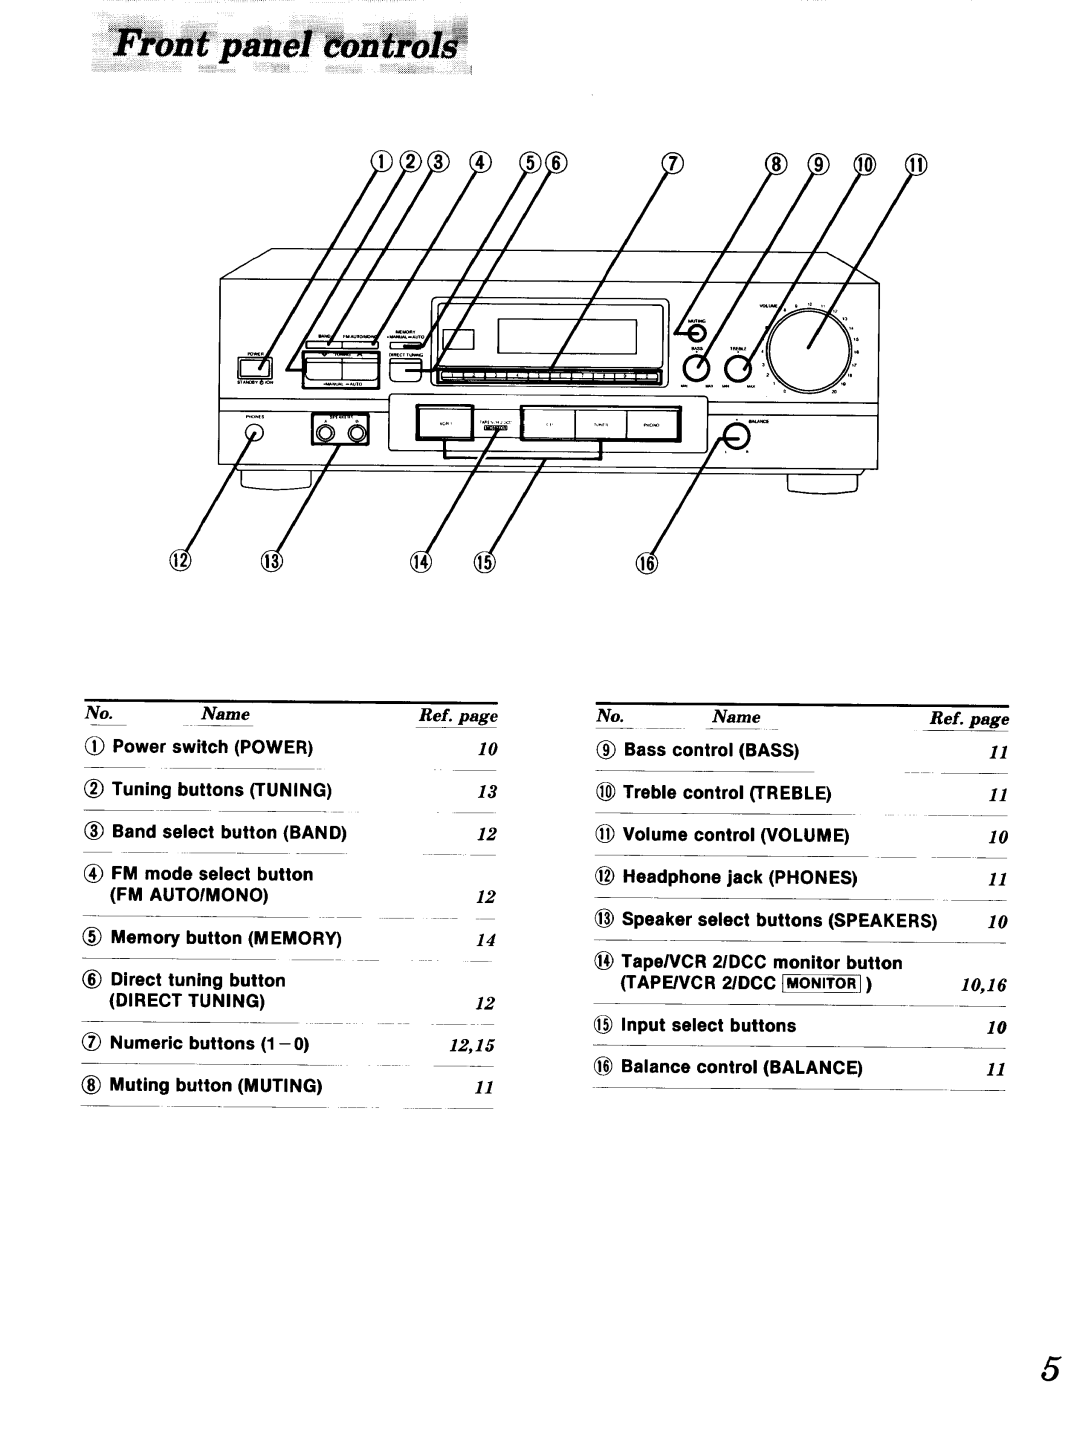 Technics SA-GX 19O manual Name, Re?. page, 10,16, Input select, buttons 